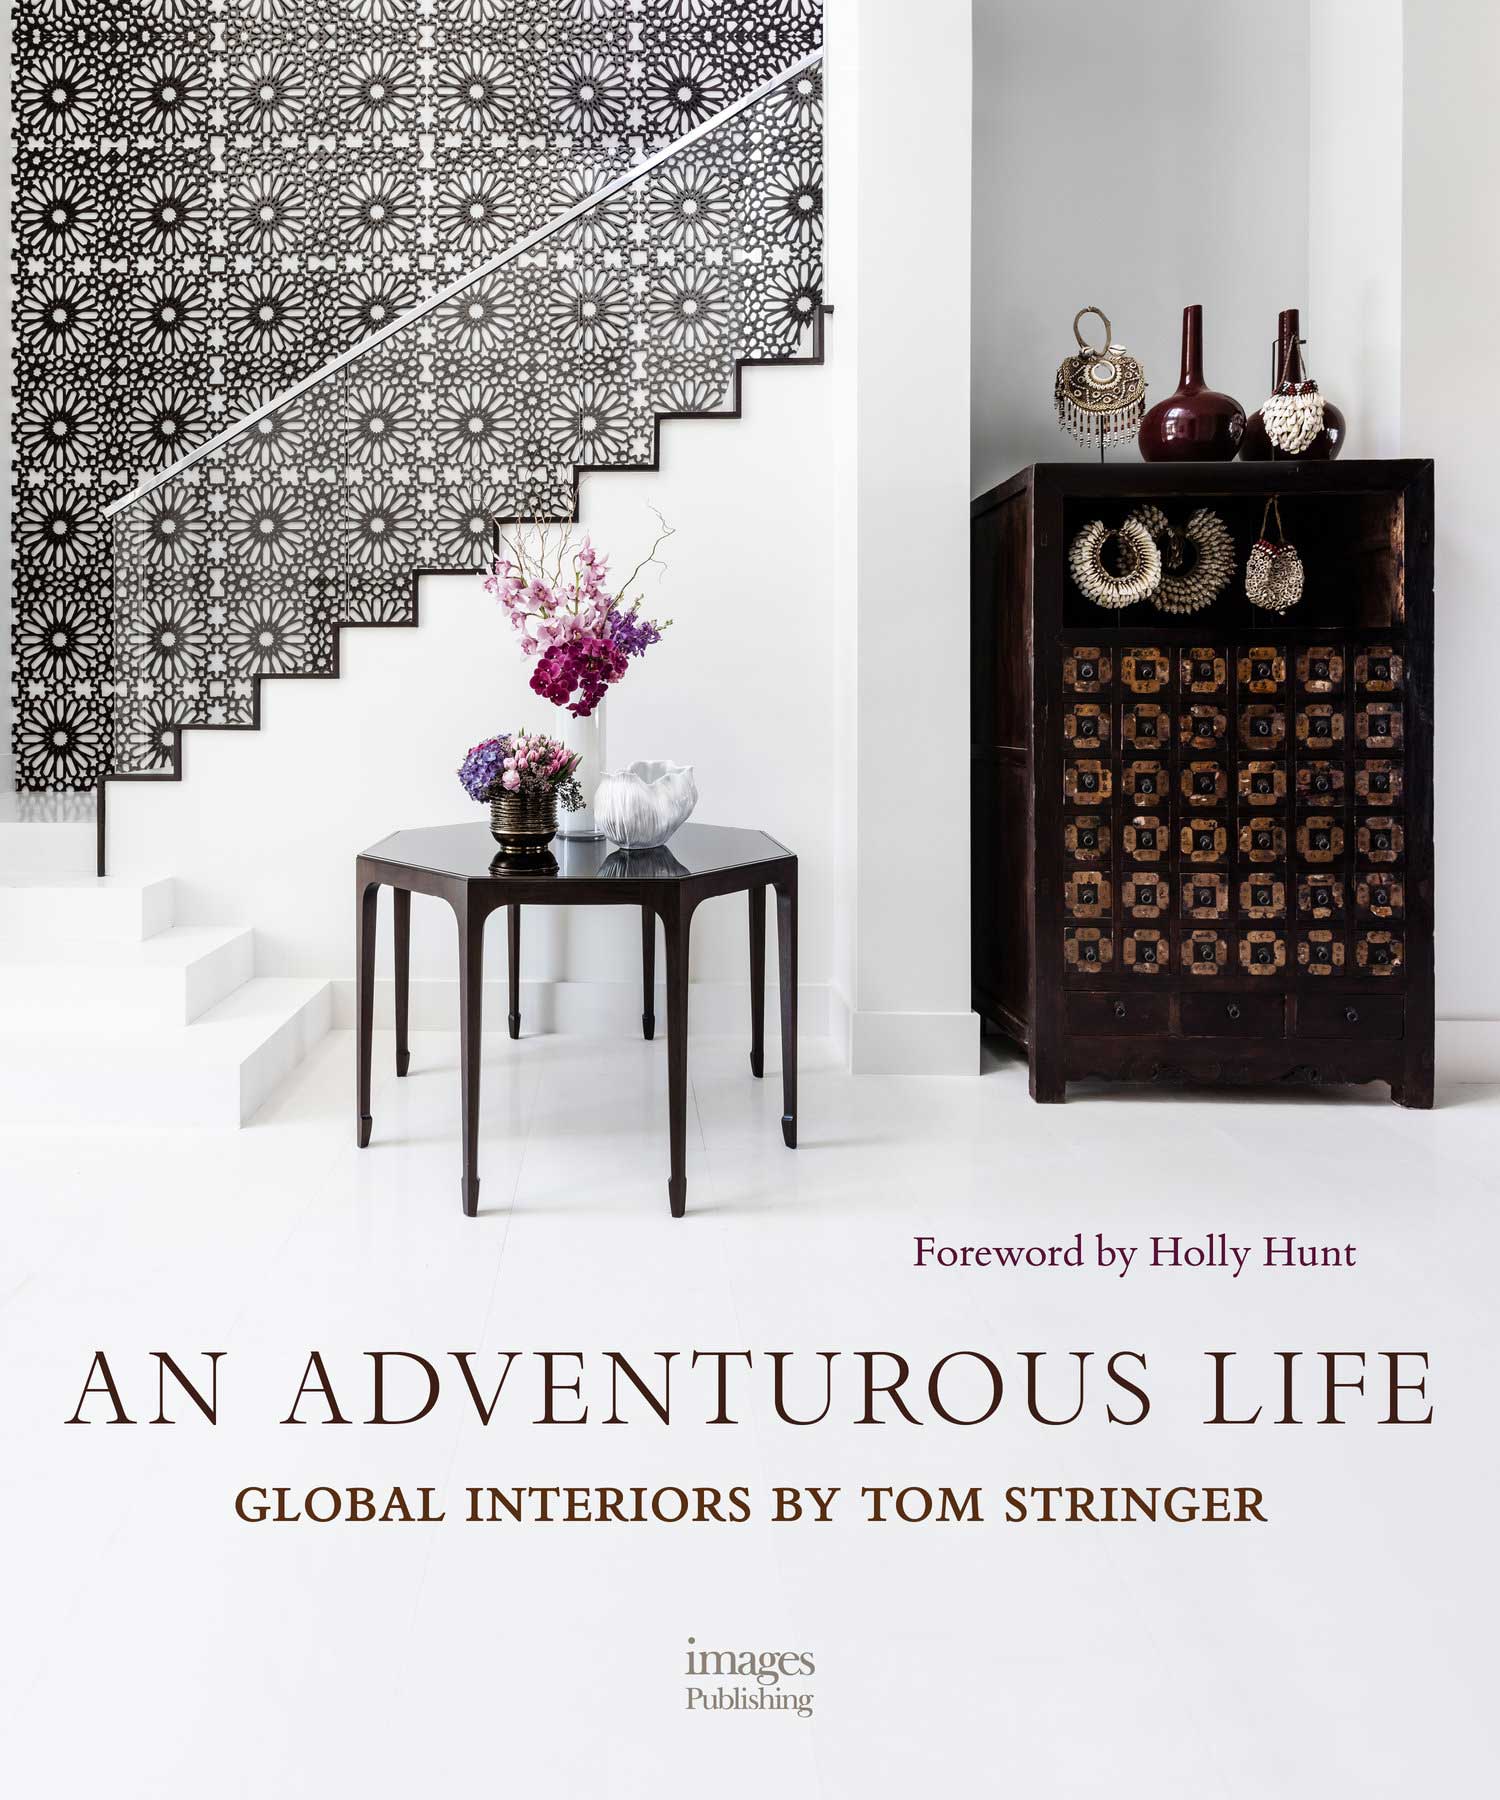 An Adventurous Life book cover